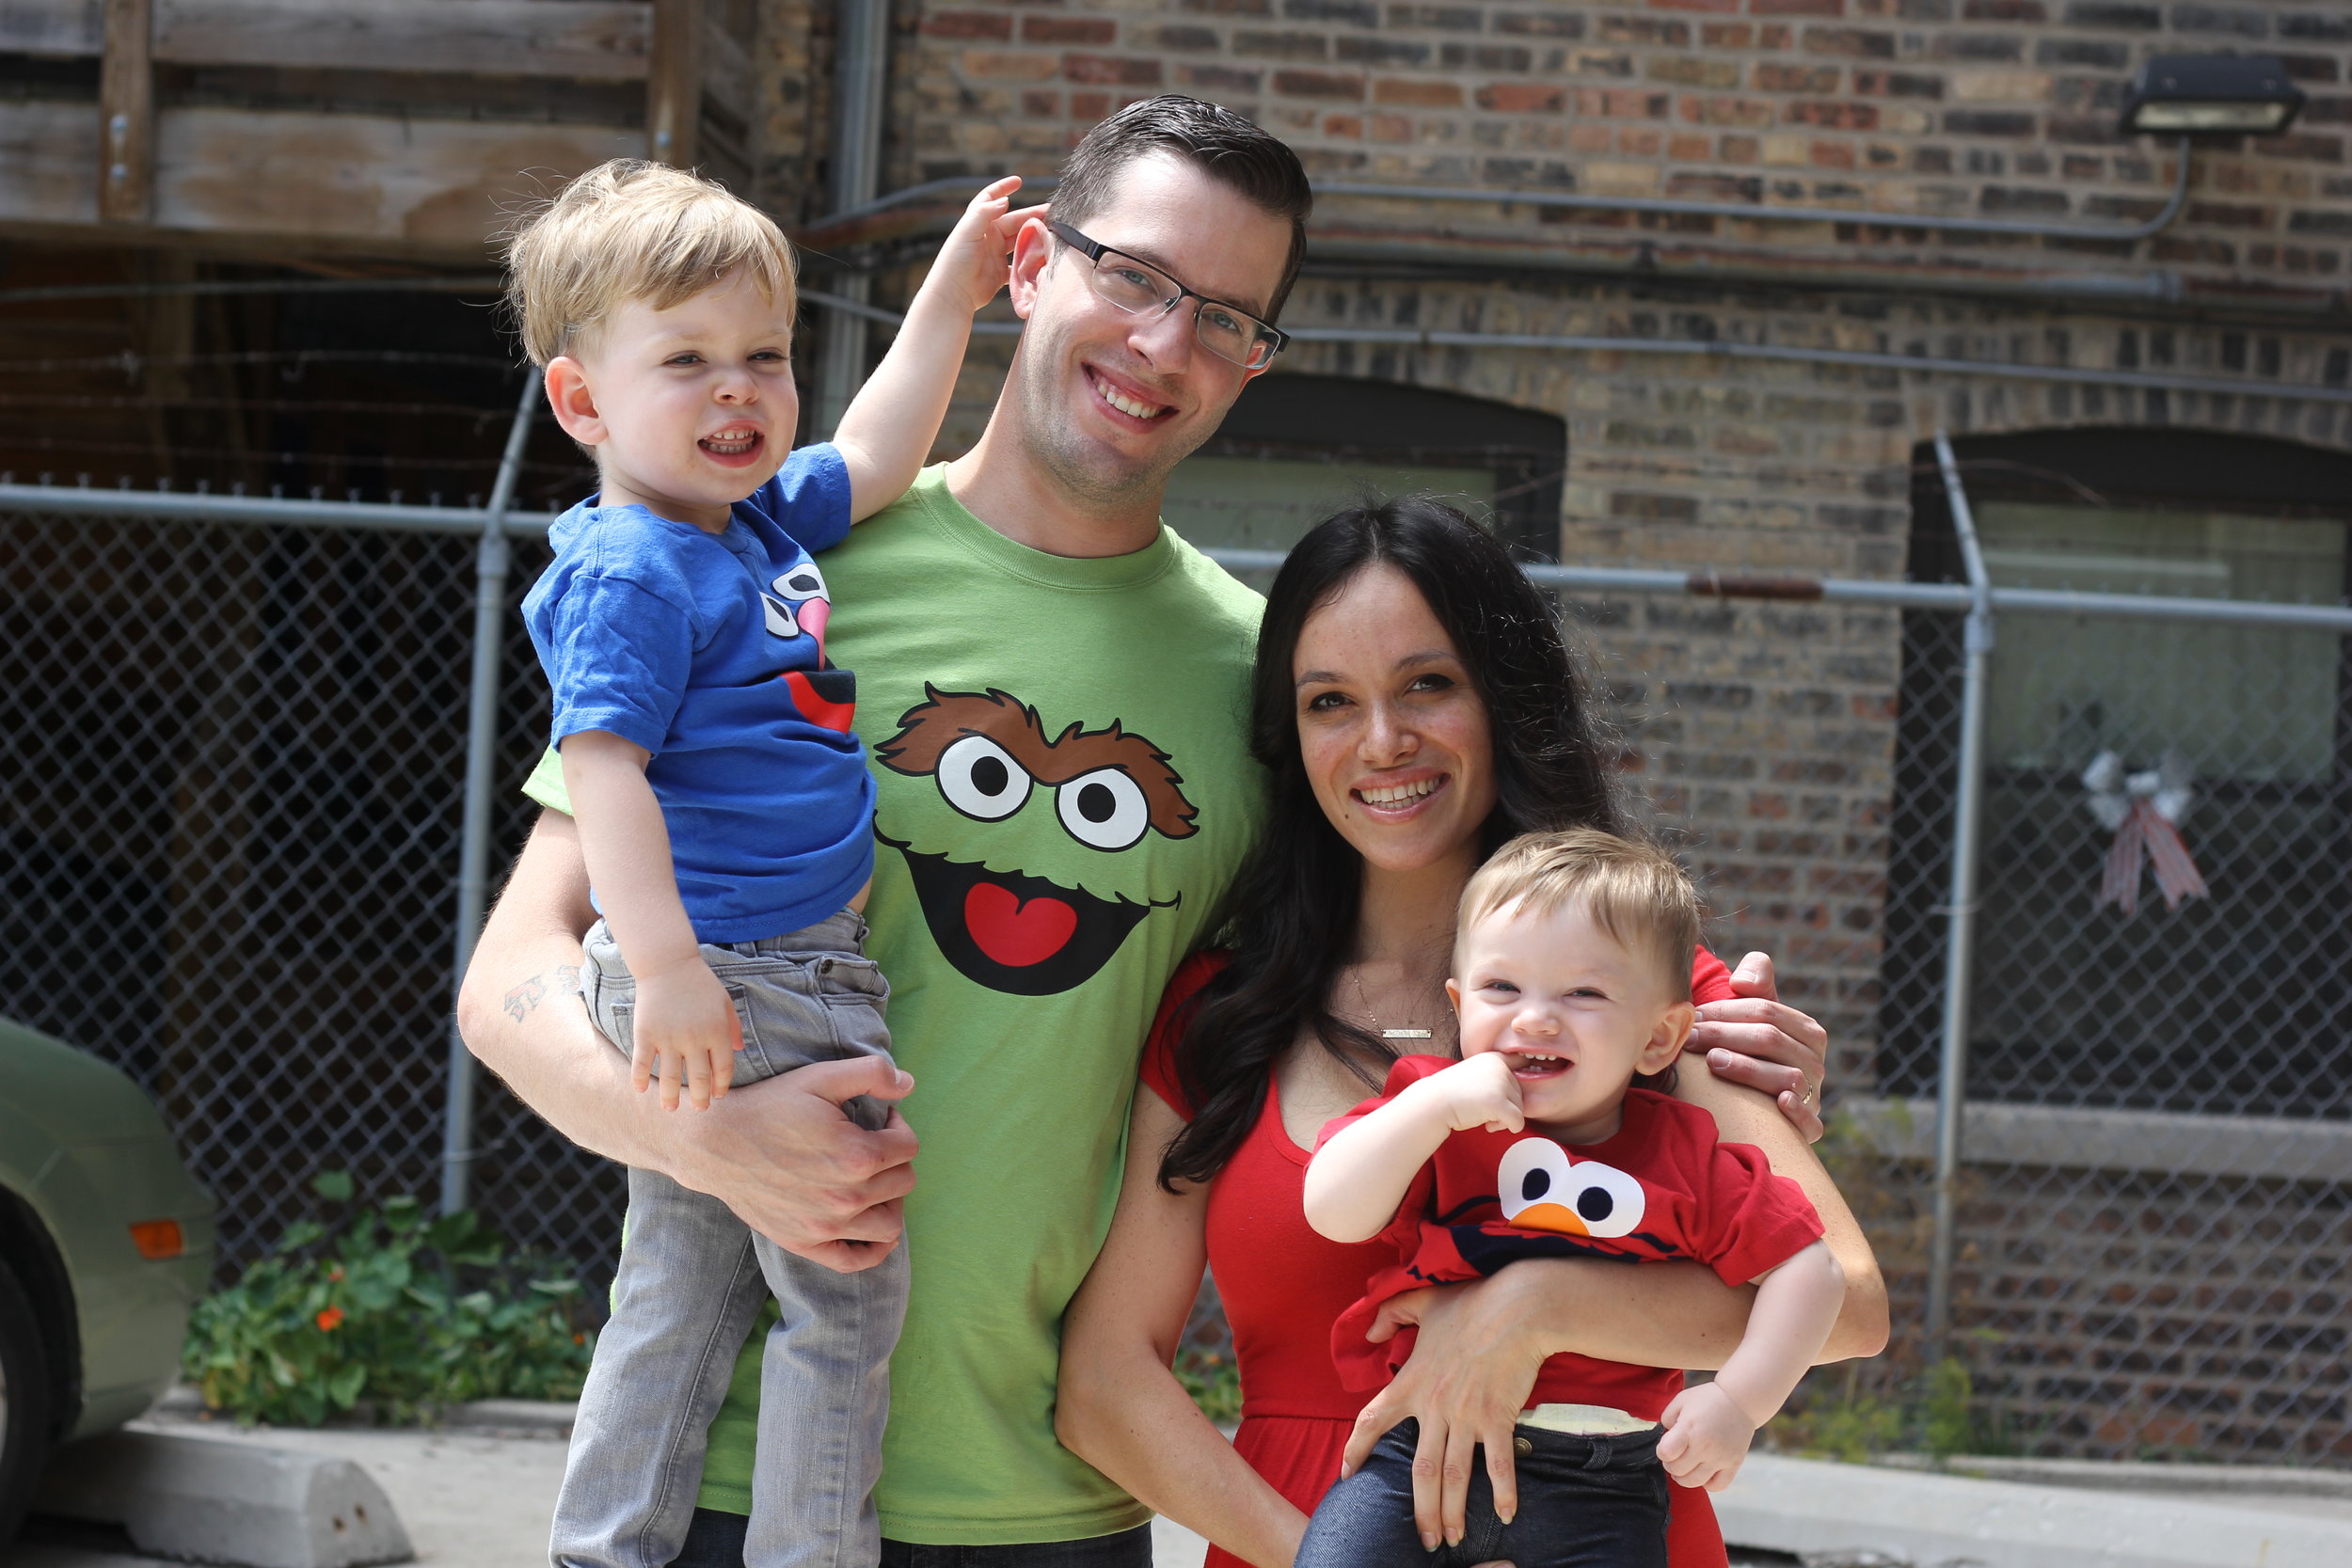 The Sesame Street birthday family